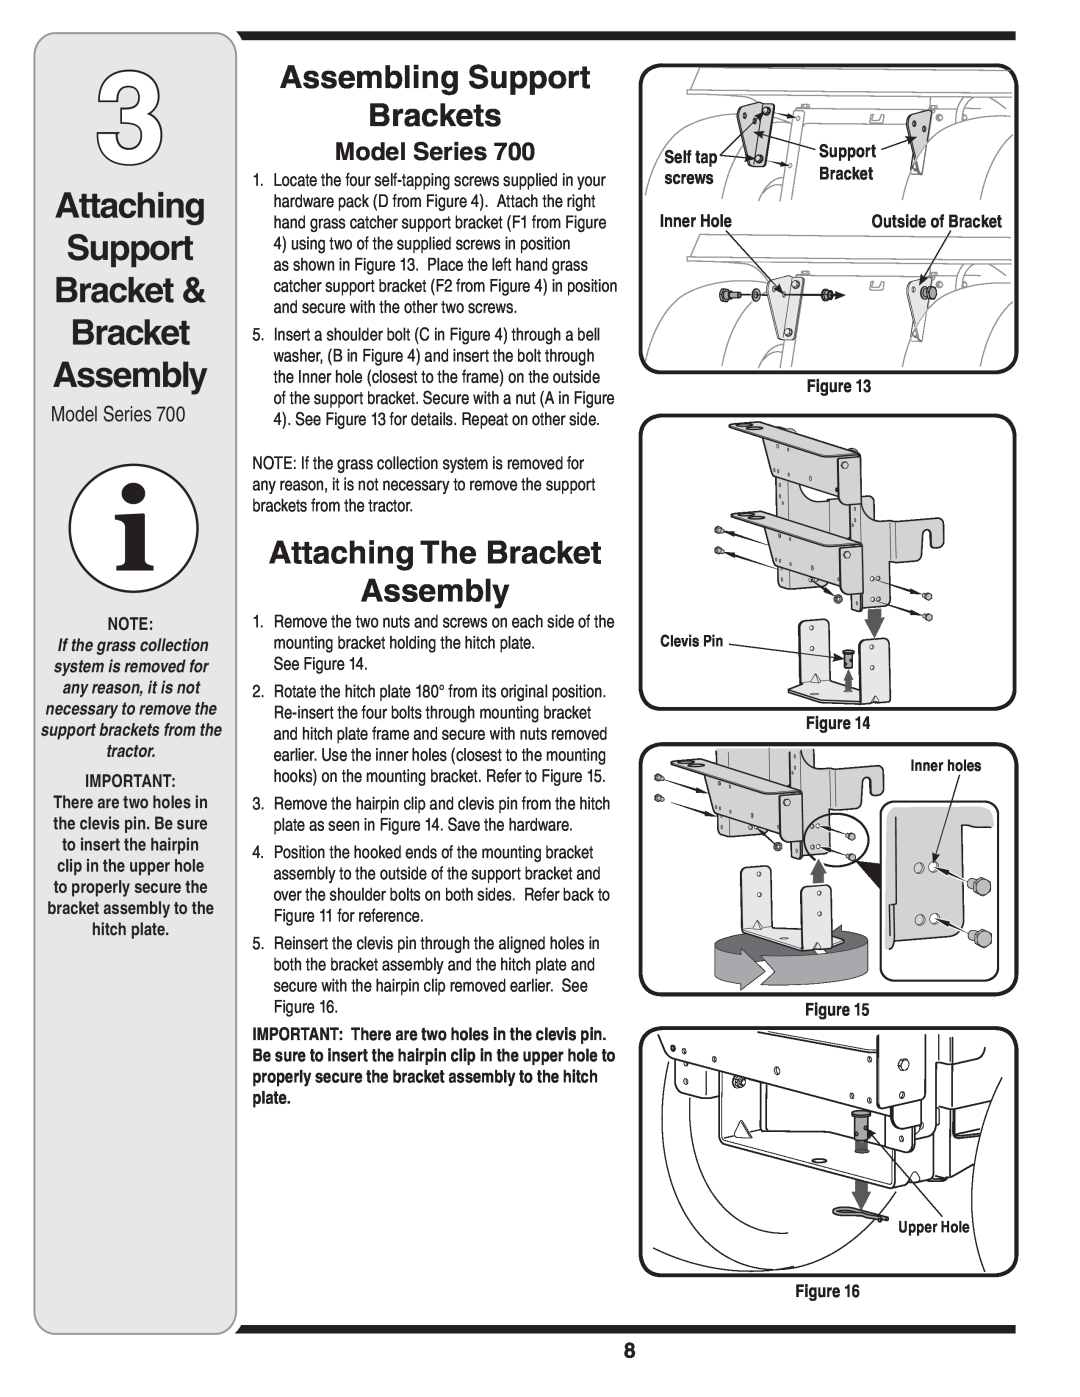 MTD OHD 190-180 Model Series, Attaching Support Bracket Bracket Assembly, Assembling Support Brackets, Self tap, screws 